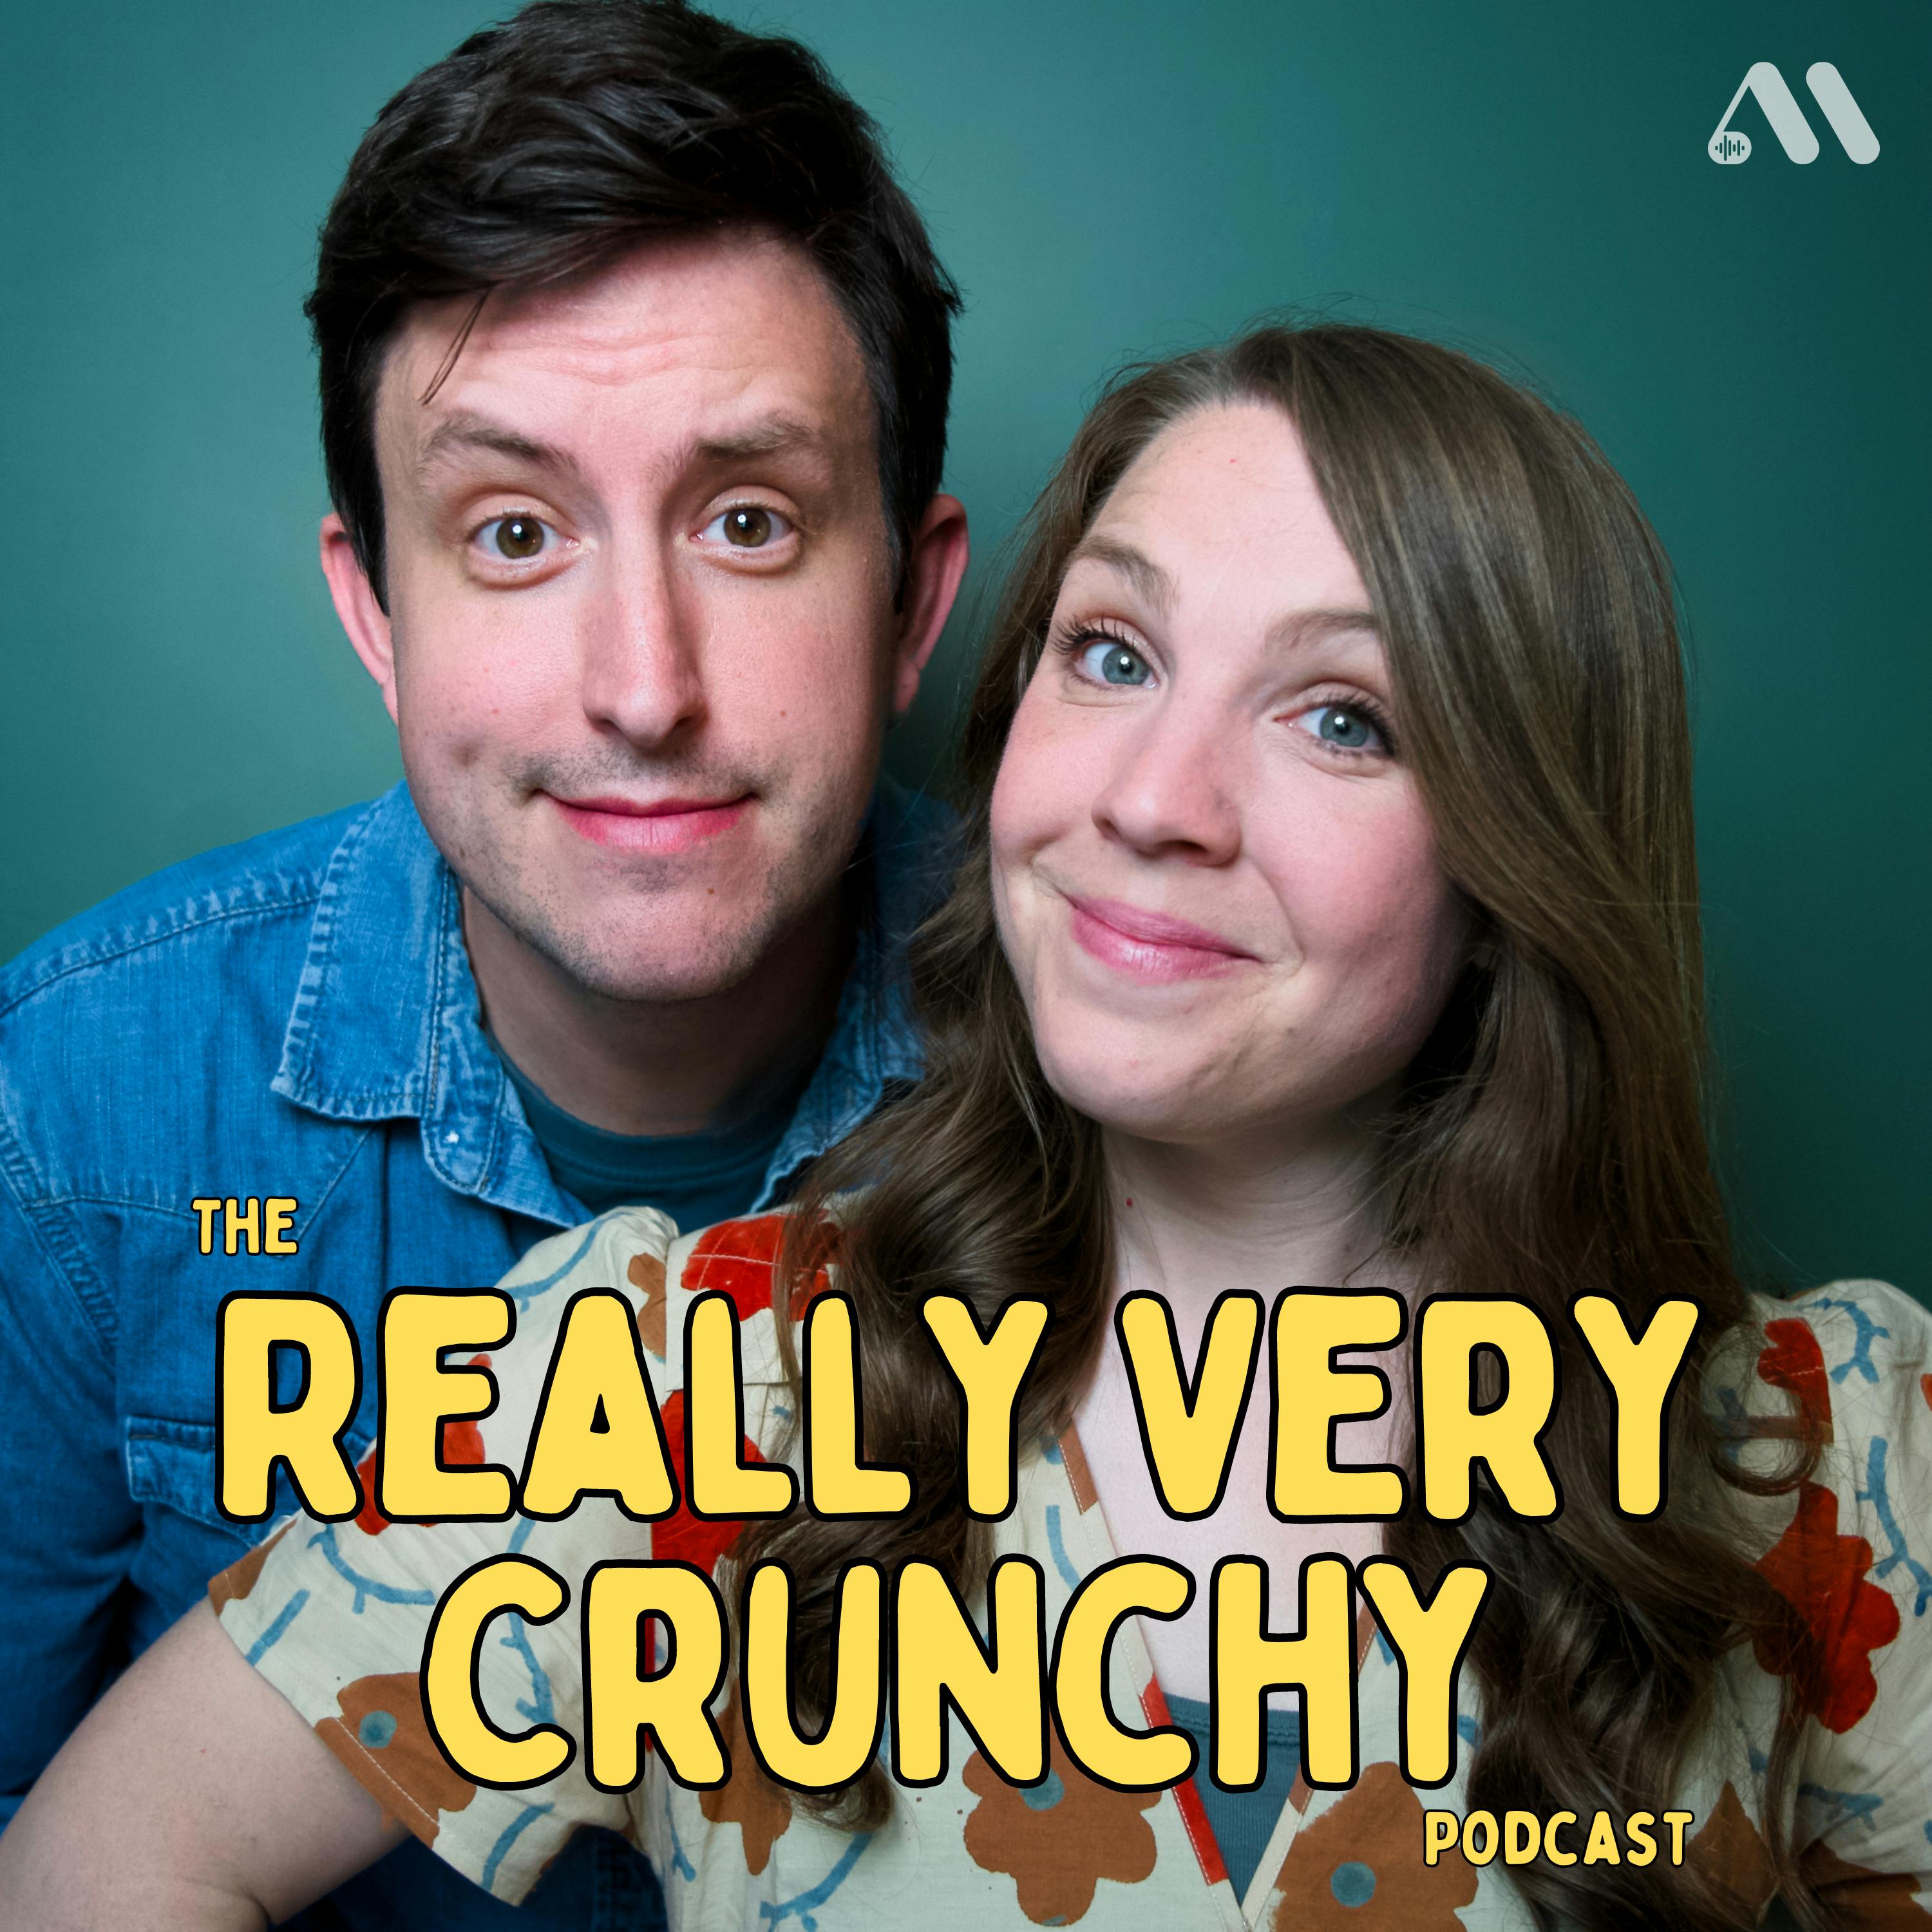 The Really Very Crunchy Podcast Trailer